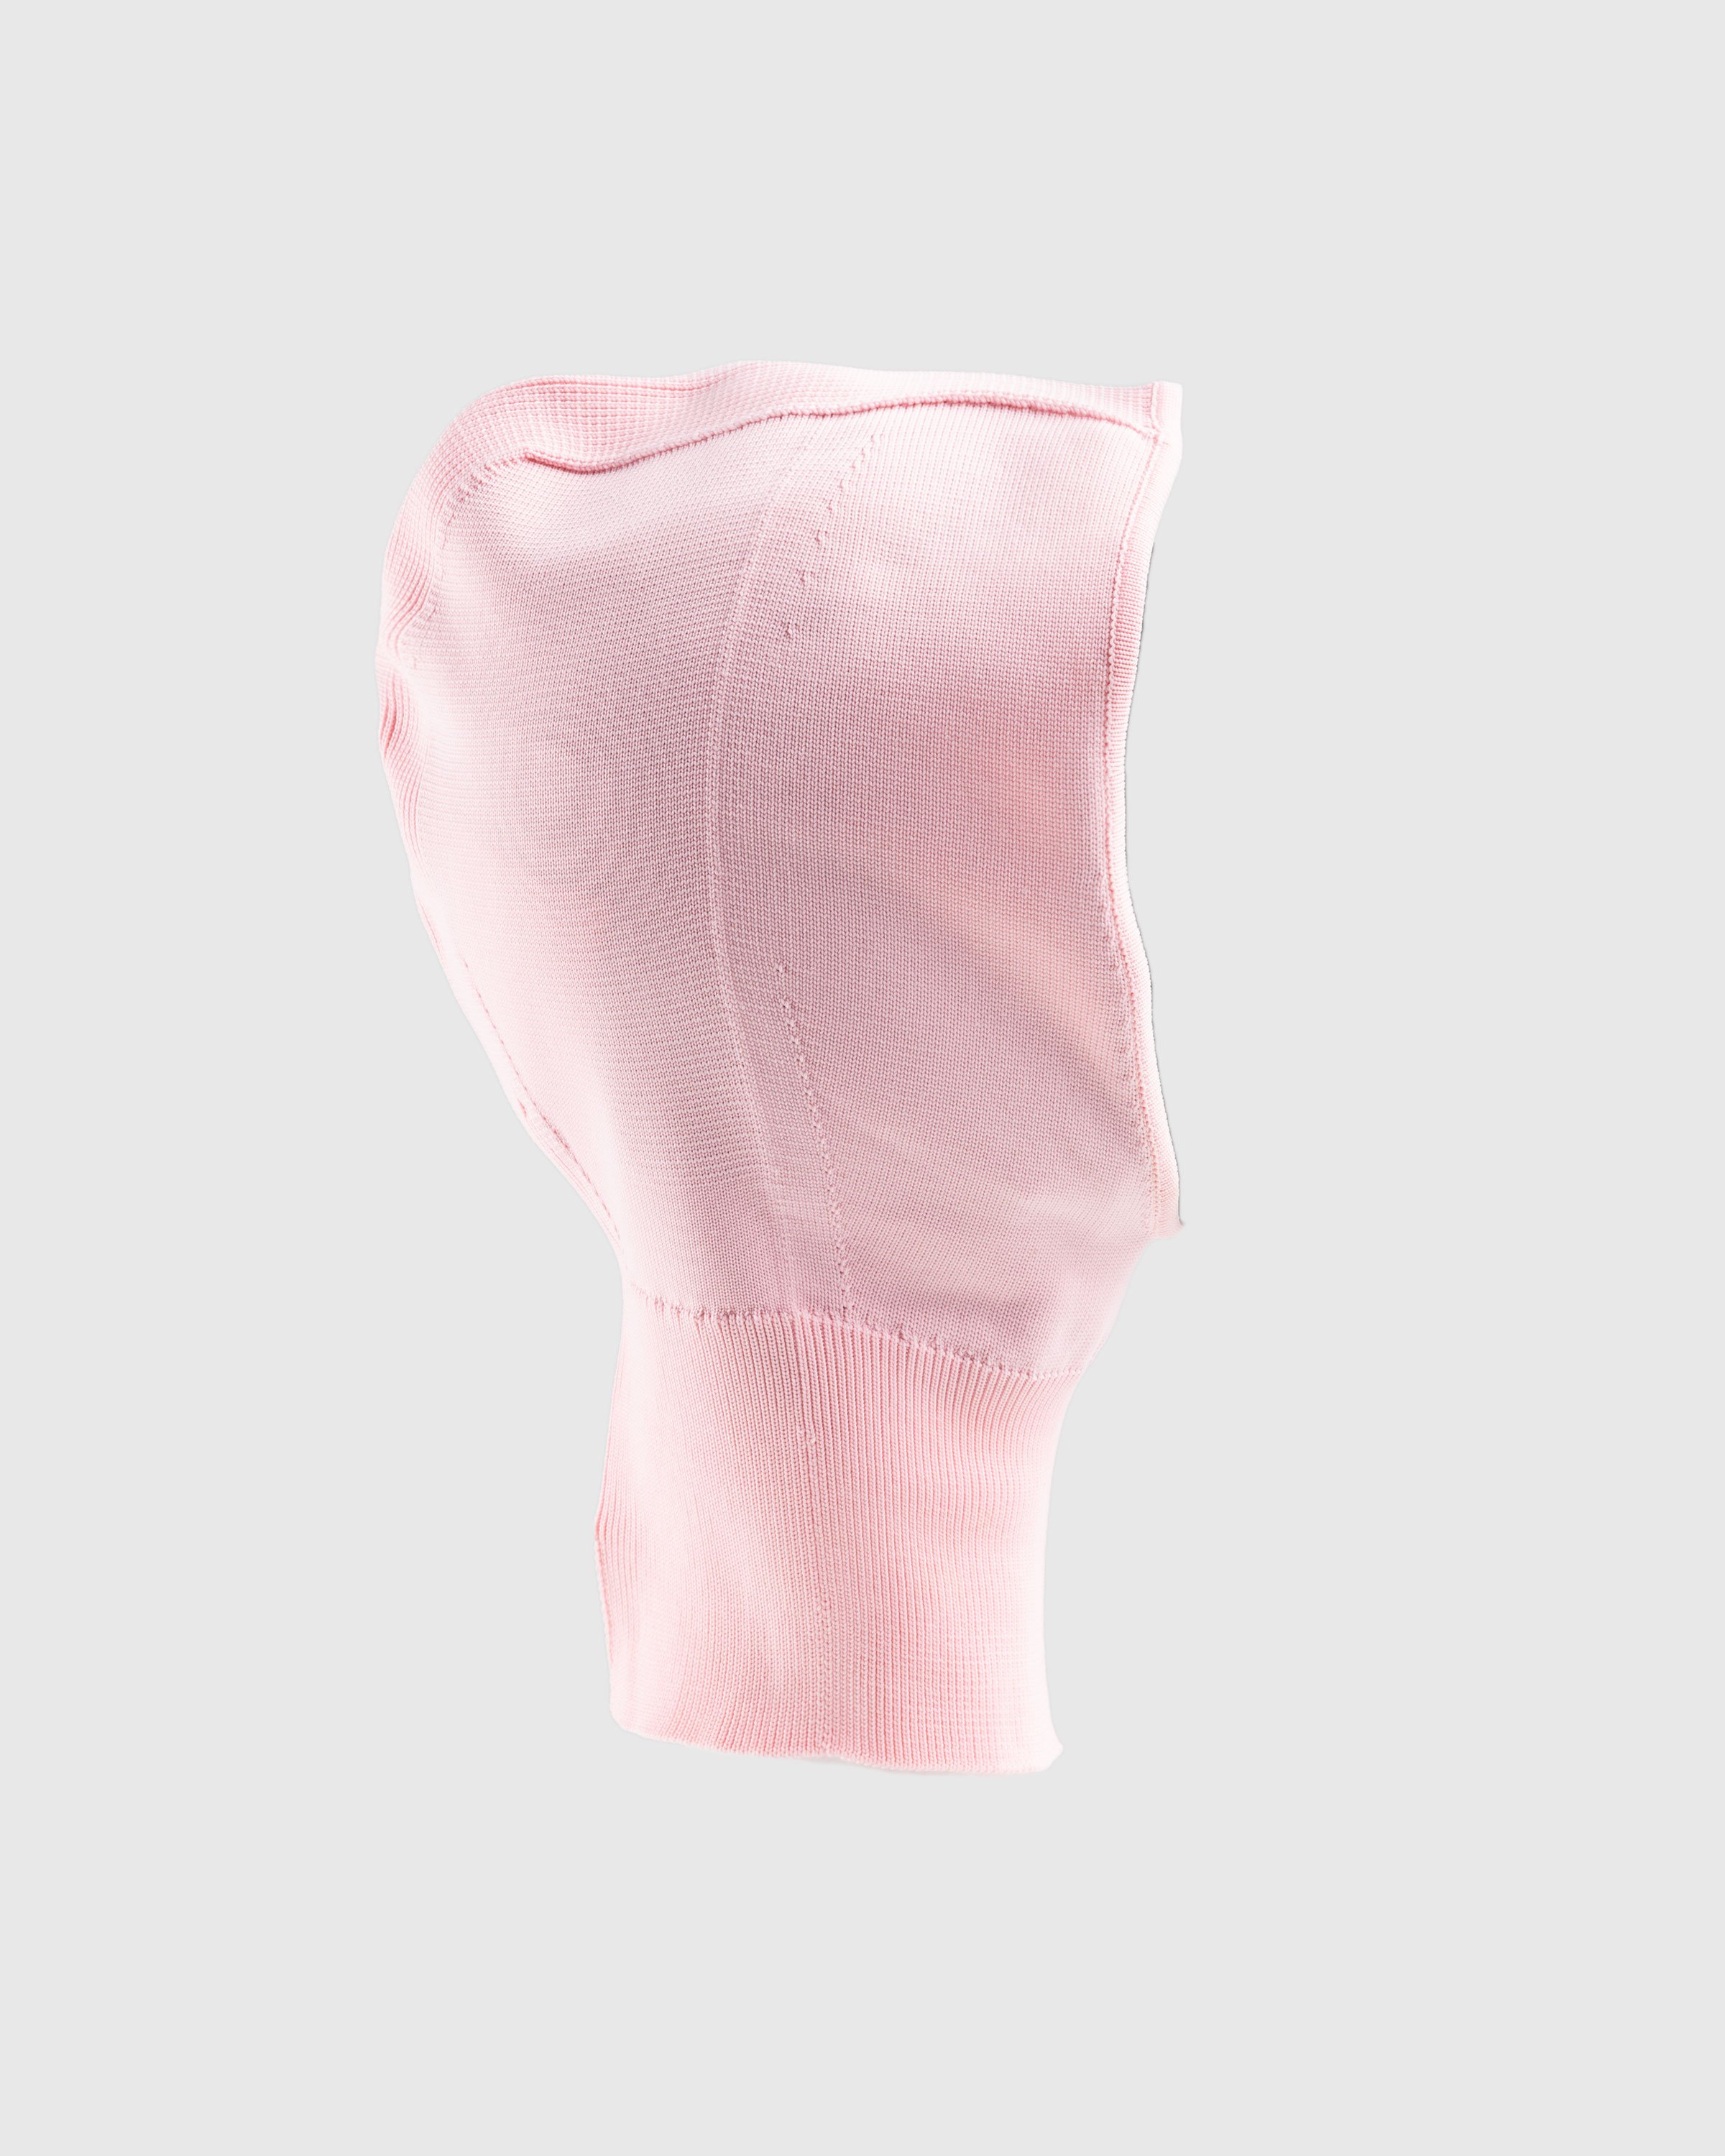 Jil Sander - BALACLAVA - Accessories - Pink - Image 3